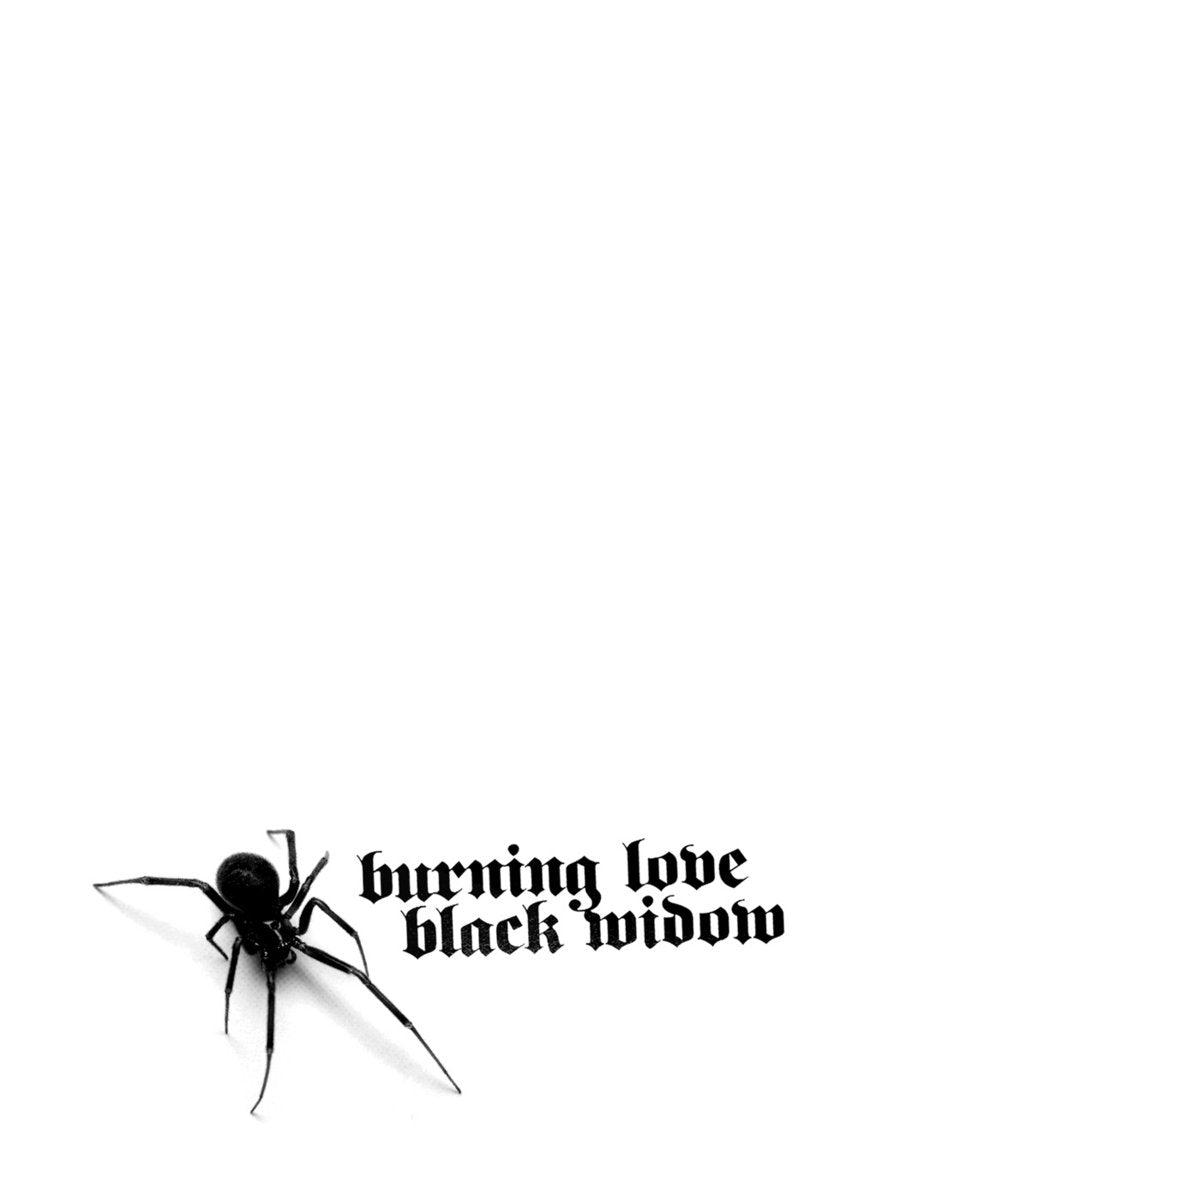 Burning Love - Black Widow (Vinyl 7")